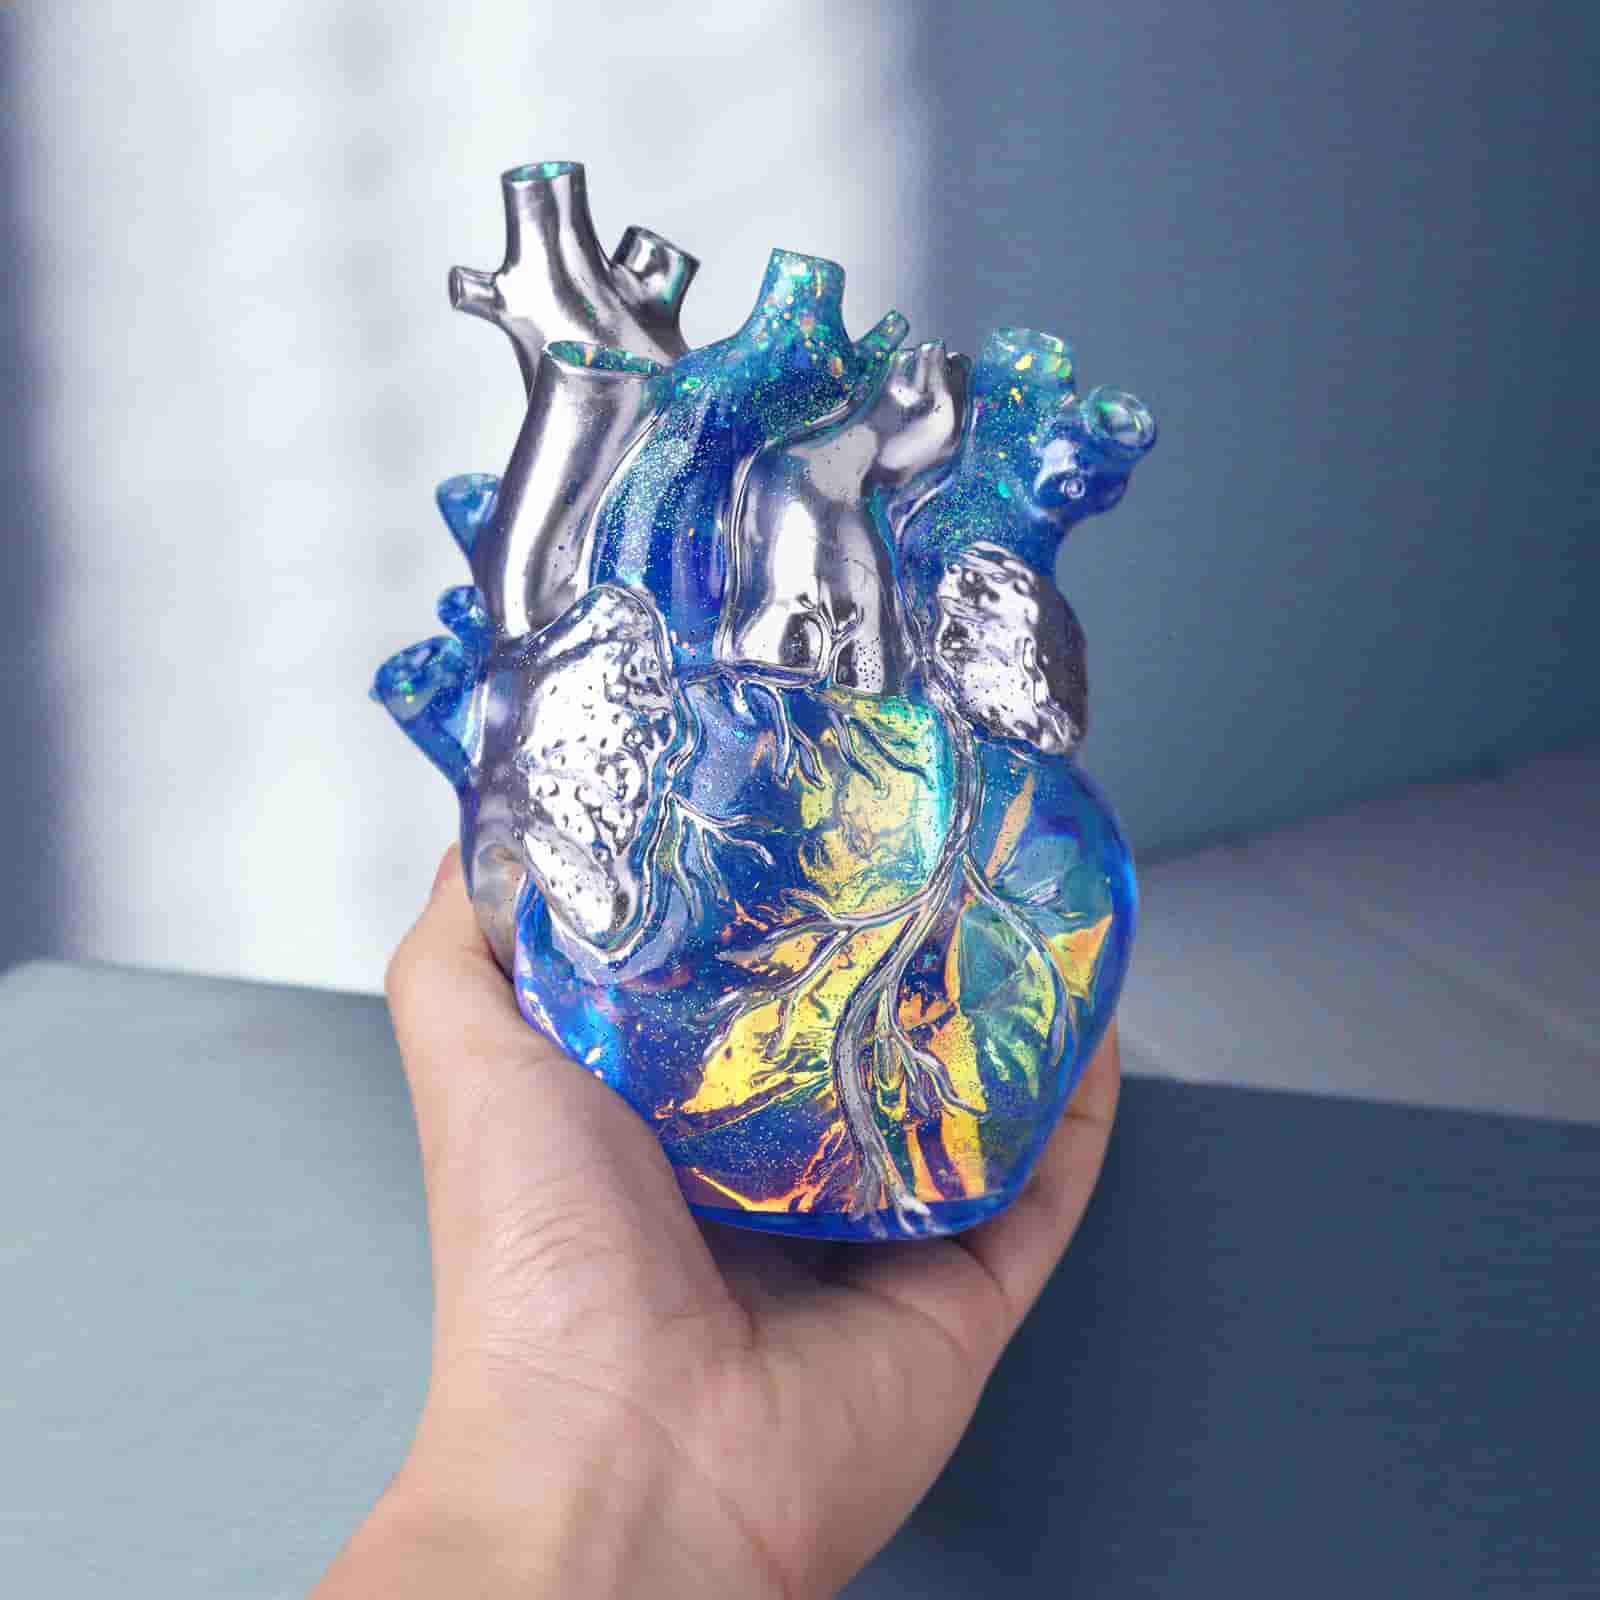 Anatomical Heart Resin Mold